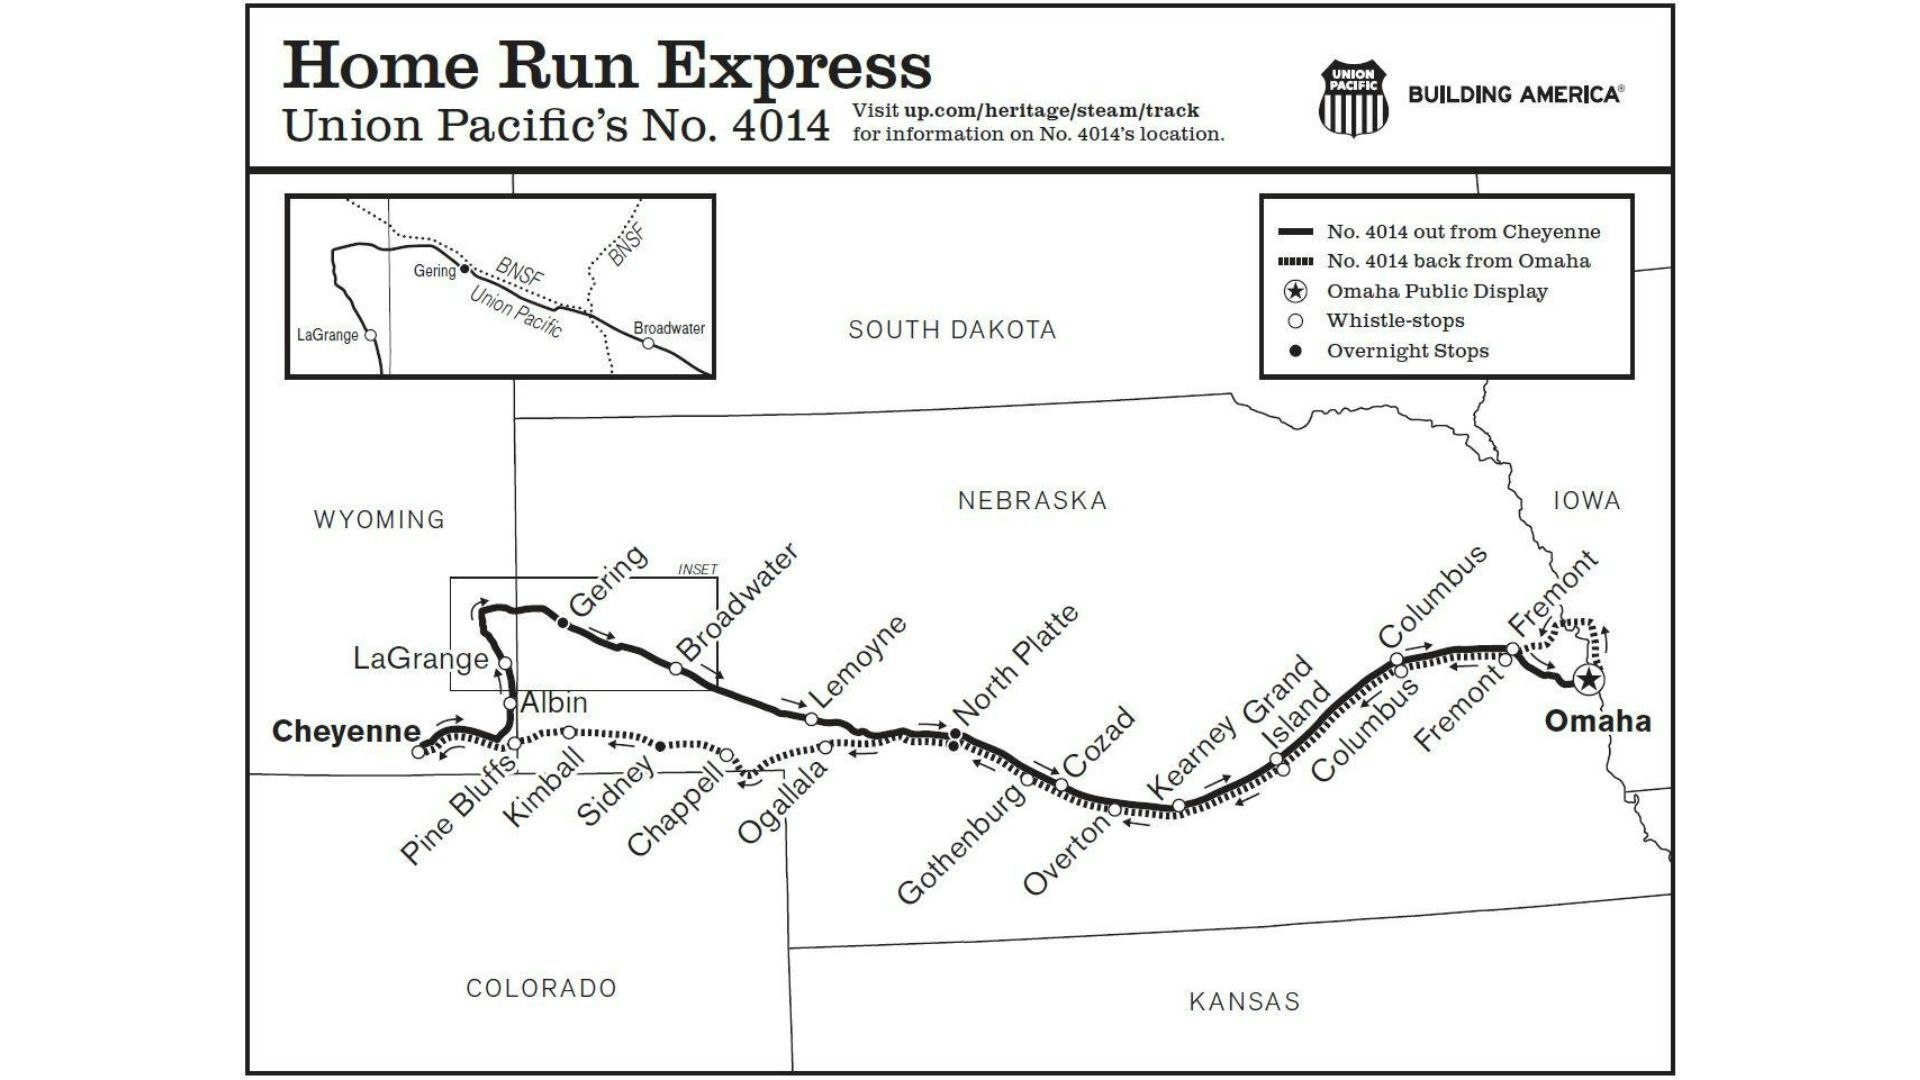 Big Boy 4014's Home Run Express Tour route.